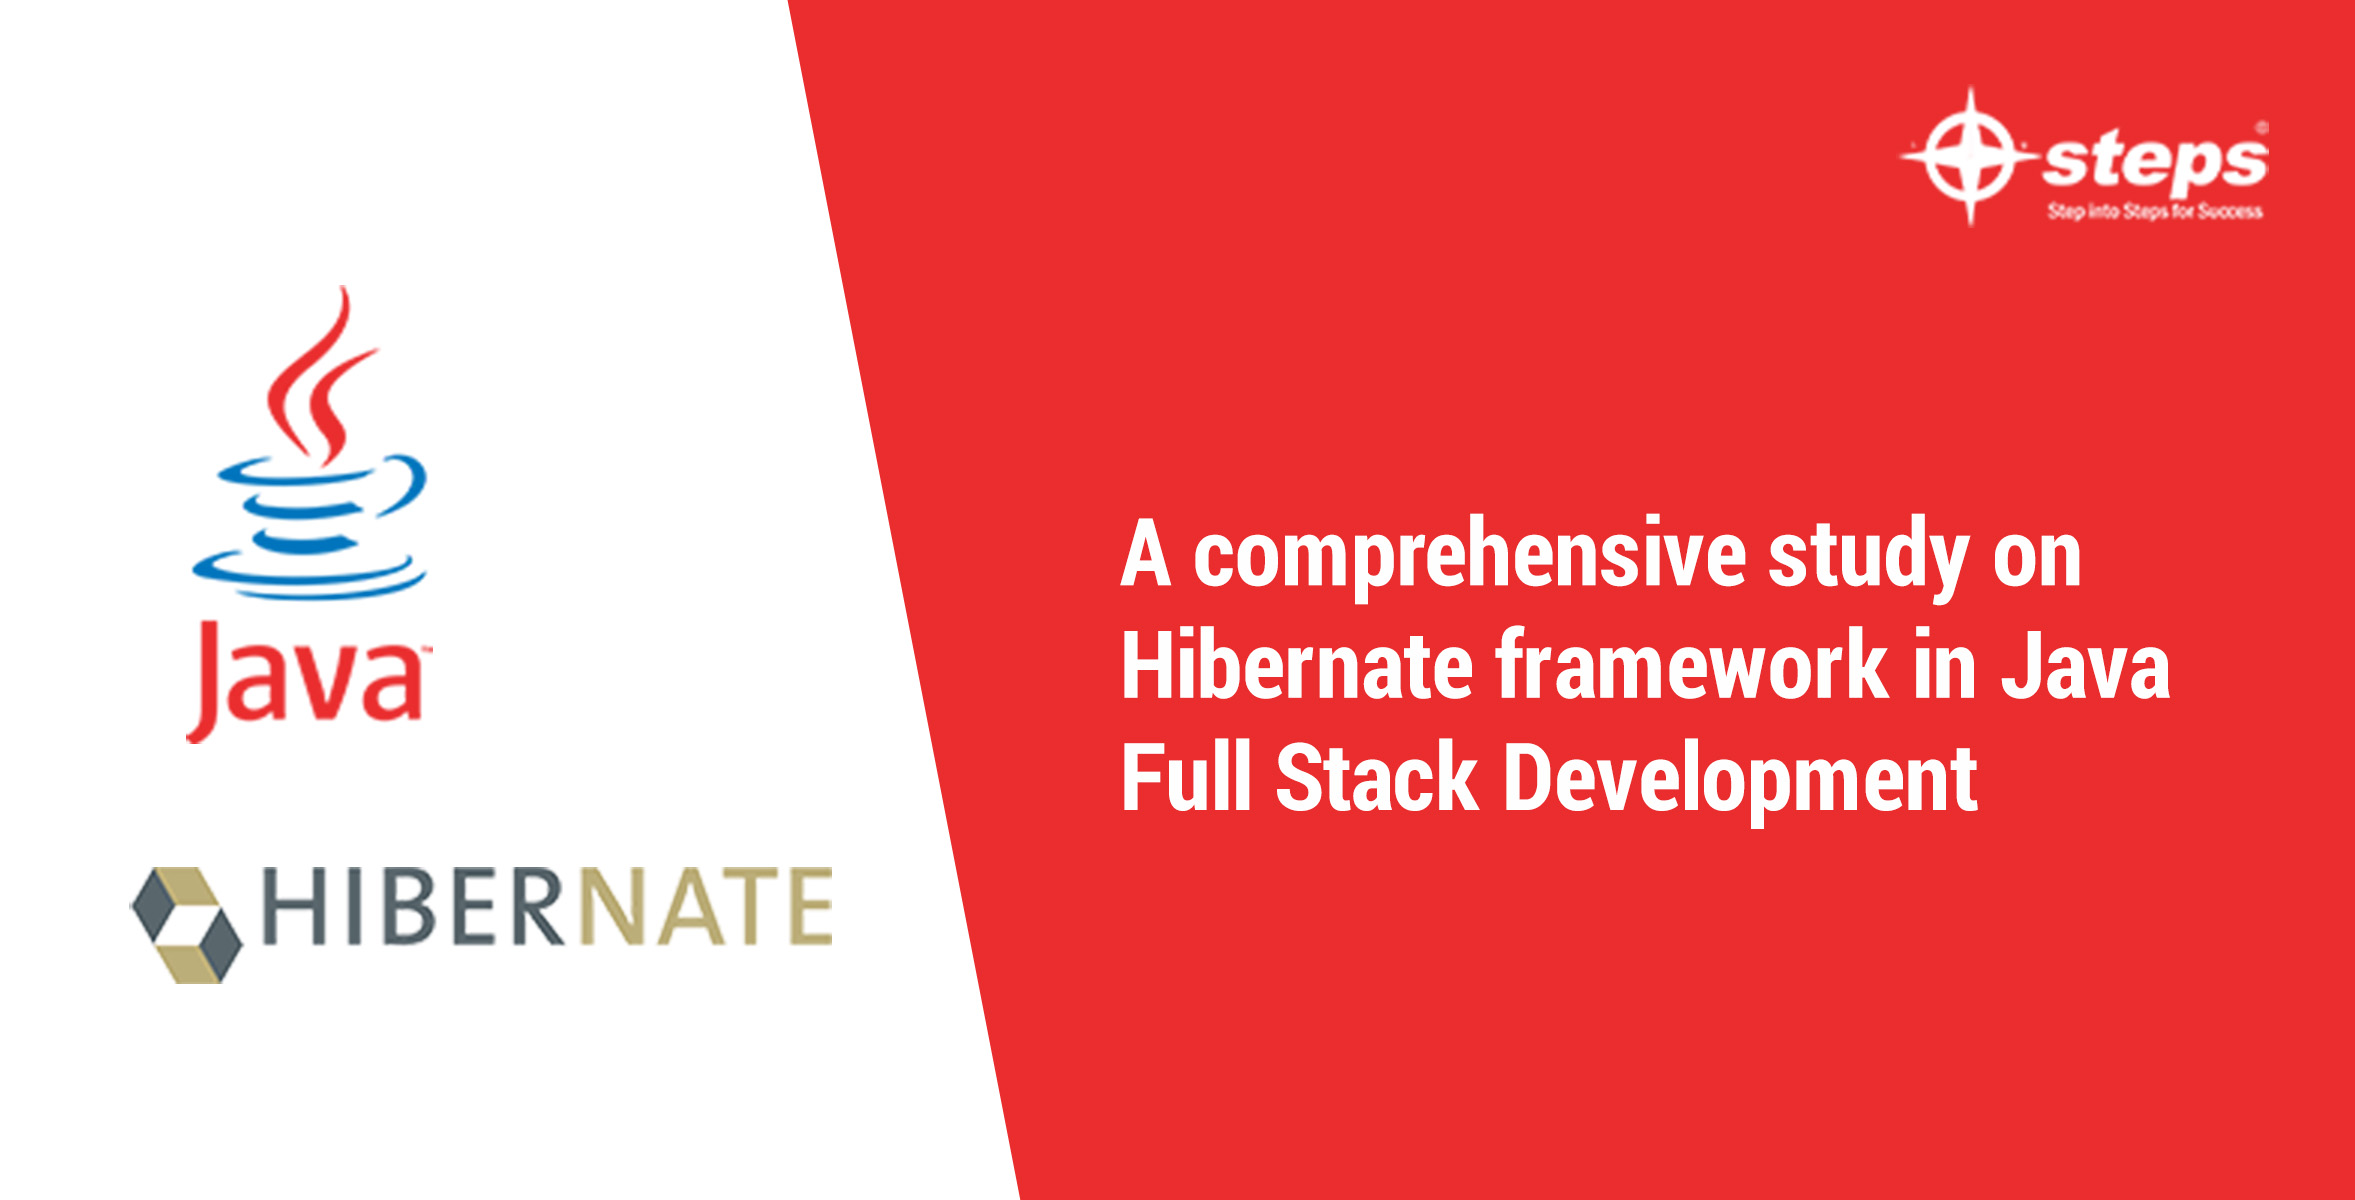 A comprehensive study on Hibernate framework in Java Full Stack Development